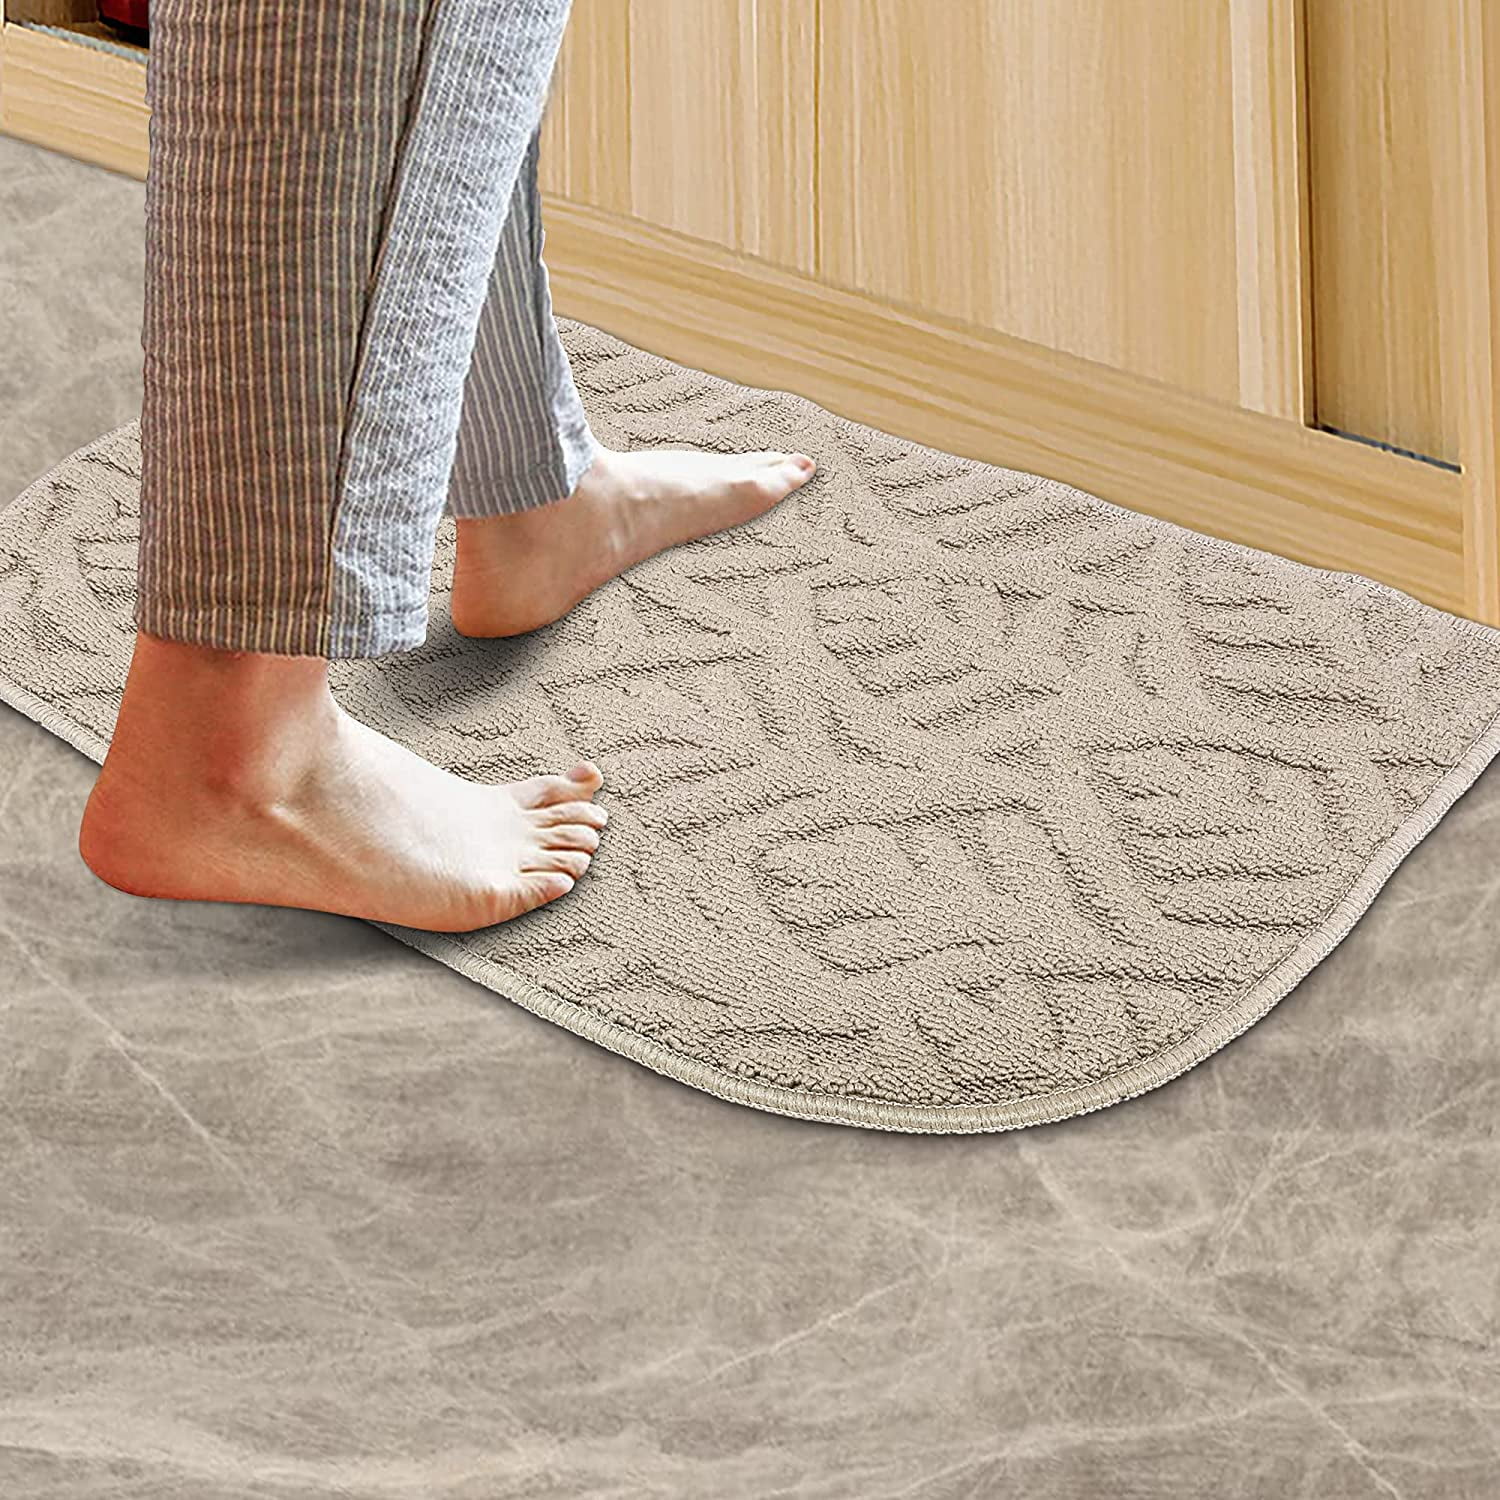 LISIBOOO Kitchen Soft Area Rugs Non-Slip Rubber Backing Carpet Floral Vintage Floor Doormat Bath Rug Runner Area Mat Sets 13x47, Red 